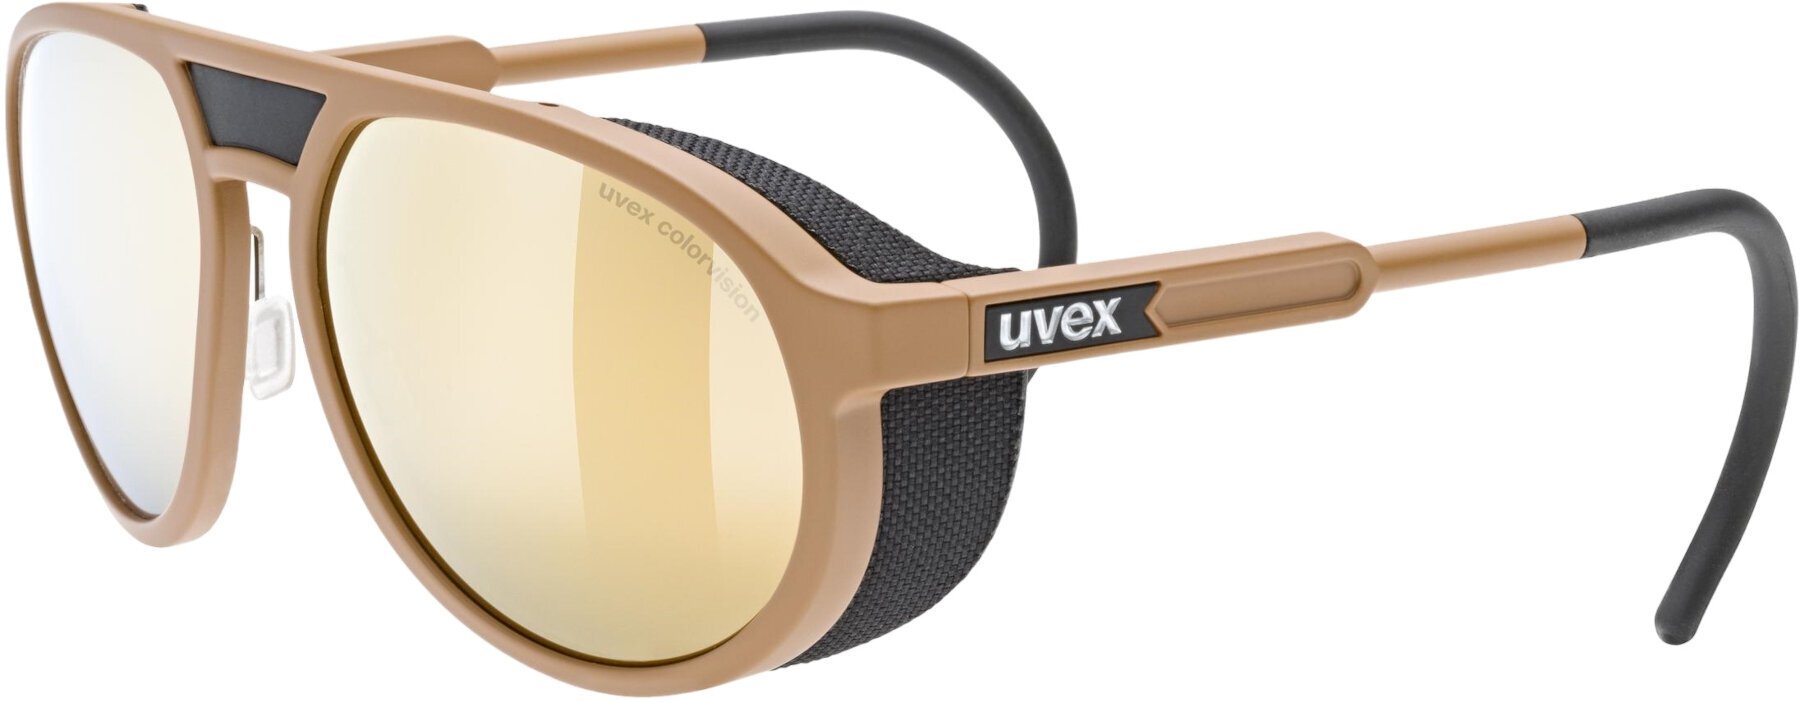 Outdoor Sunglasses UVEX MTN Classic CV Desert Mat/Colorvision Mirror Champagne Outdoor Sunglasses